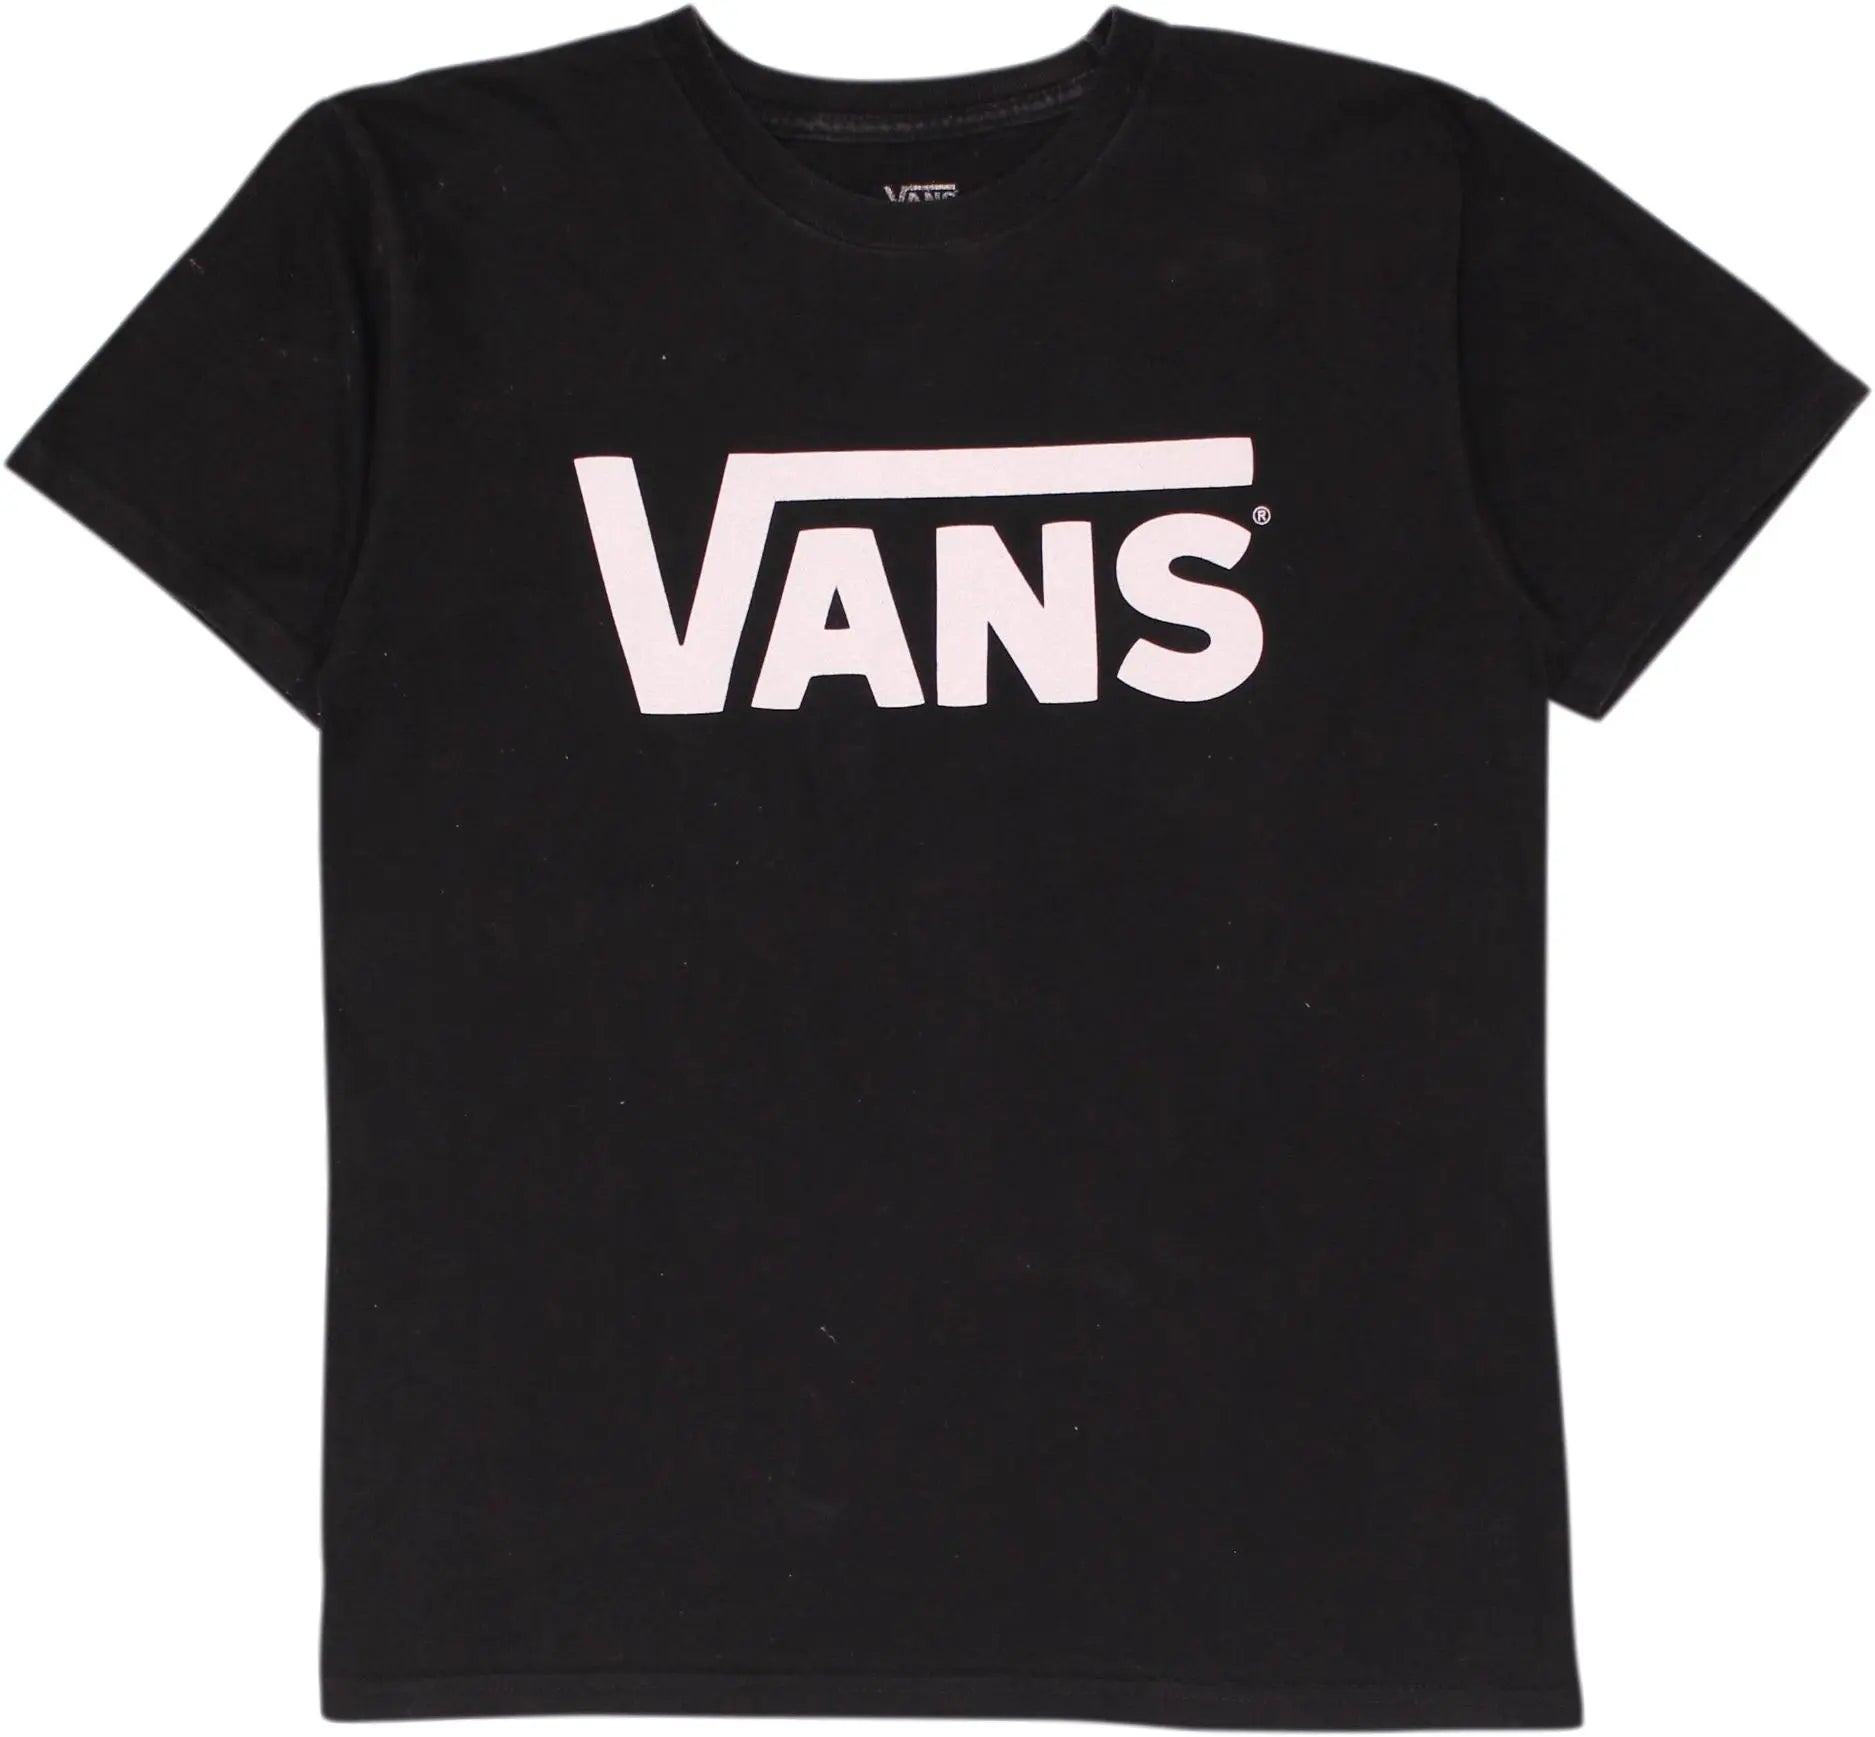 Vans - Vans T-Shirt- ThriftTale.com - Vintage and second handclothing